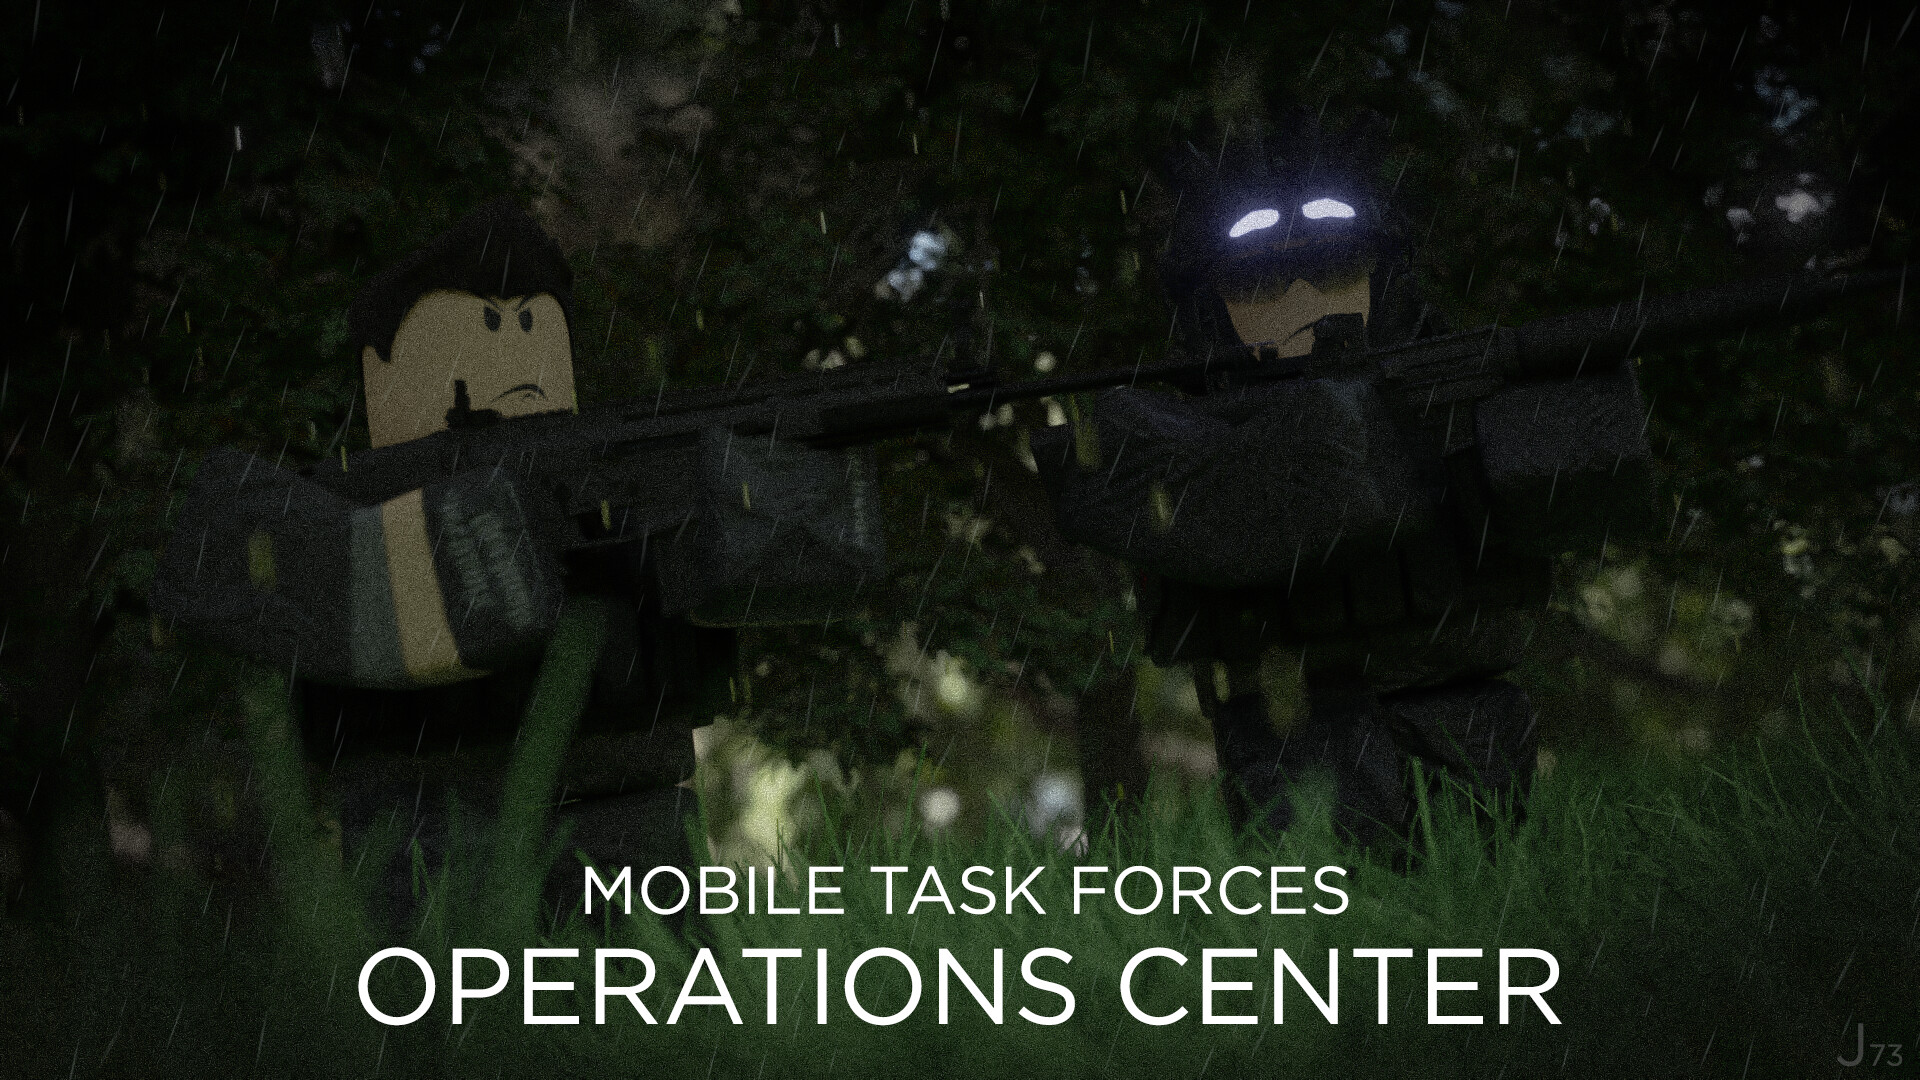 Jamtri - Mobile Task Forces Ceremony Center GFX